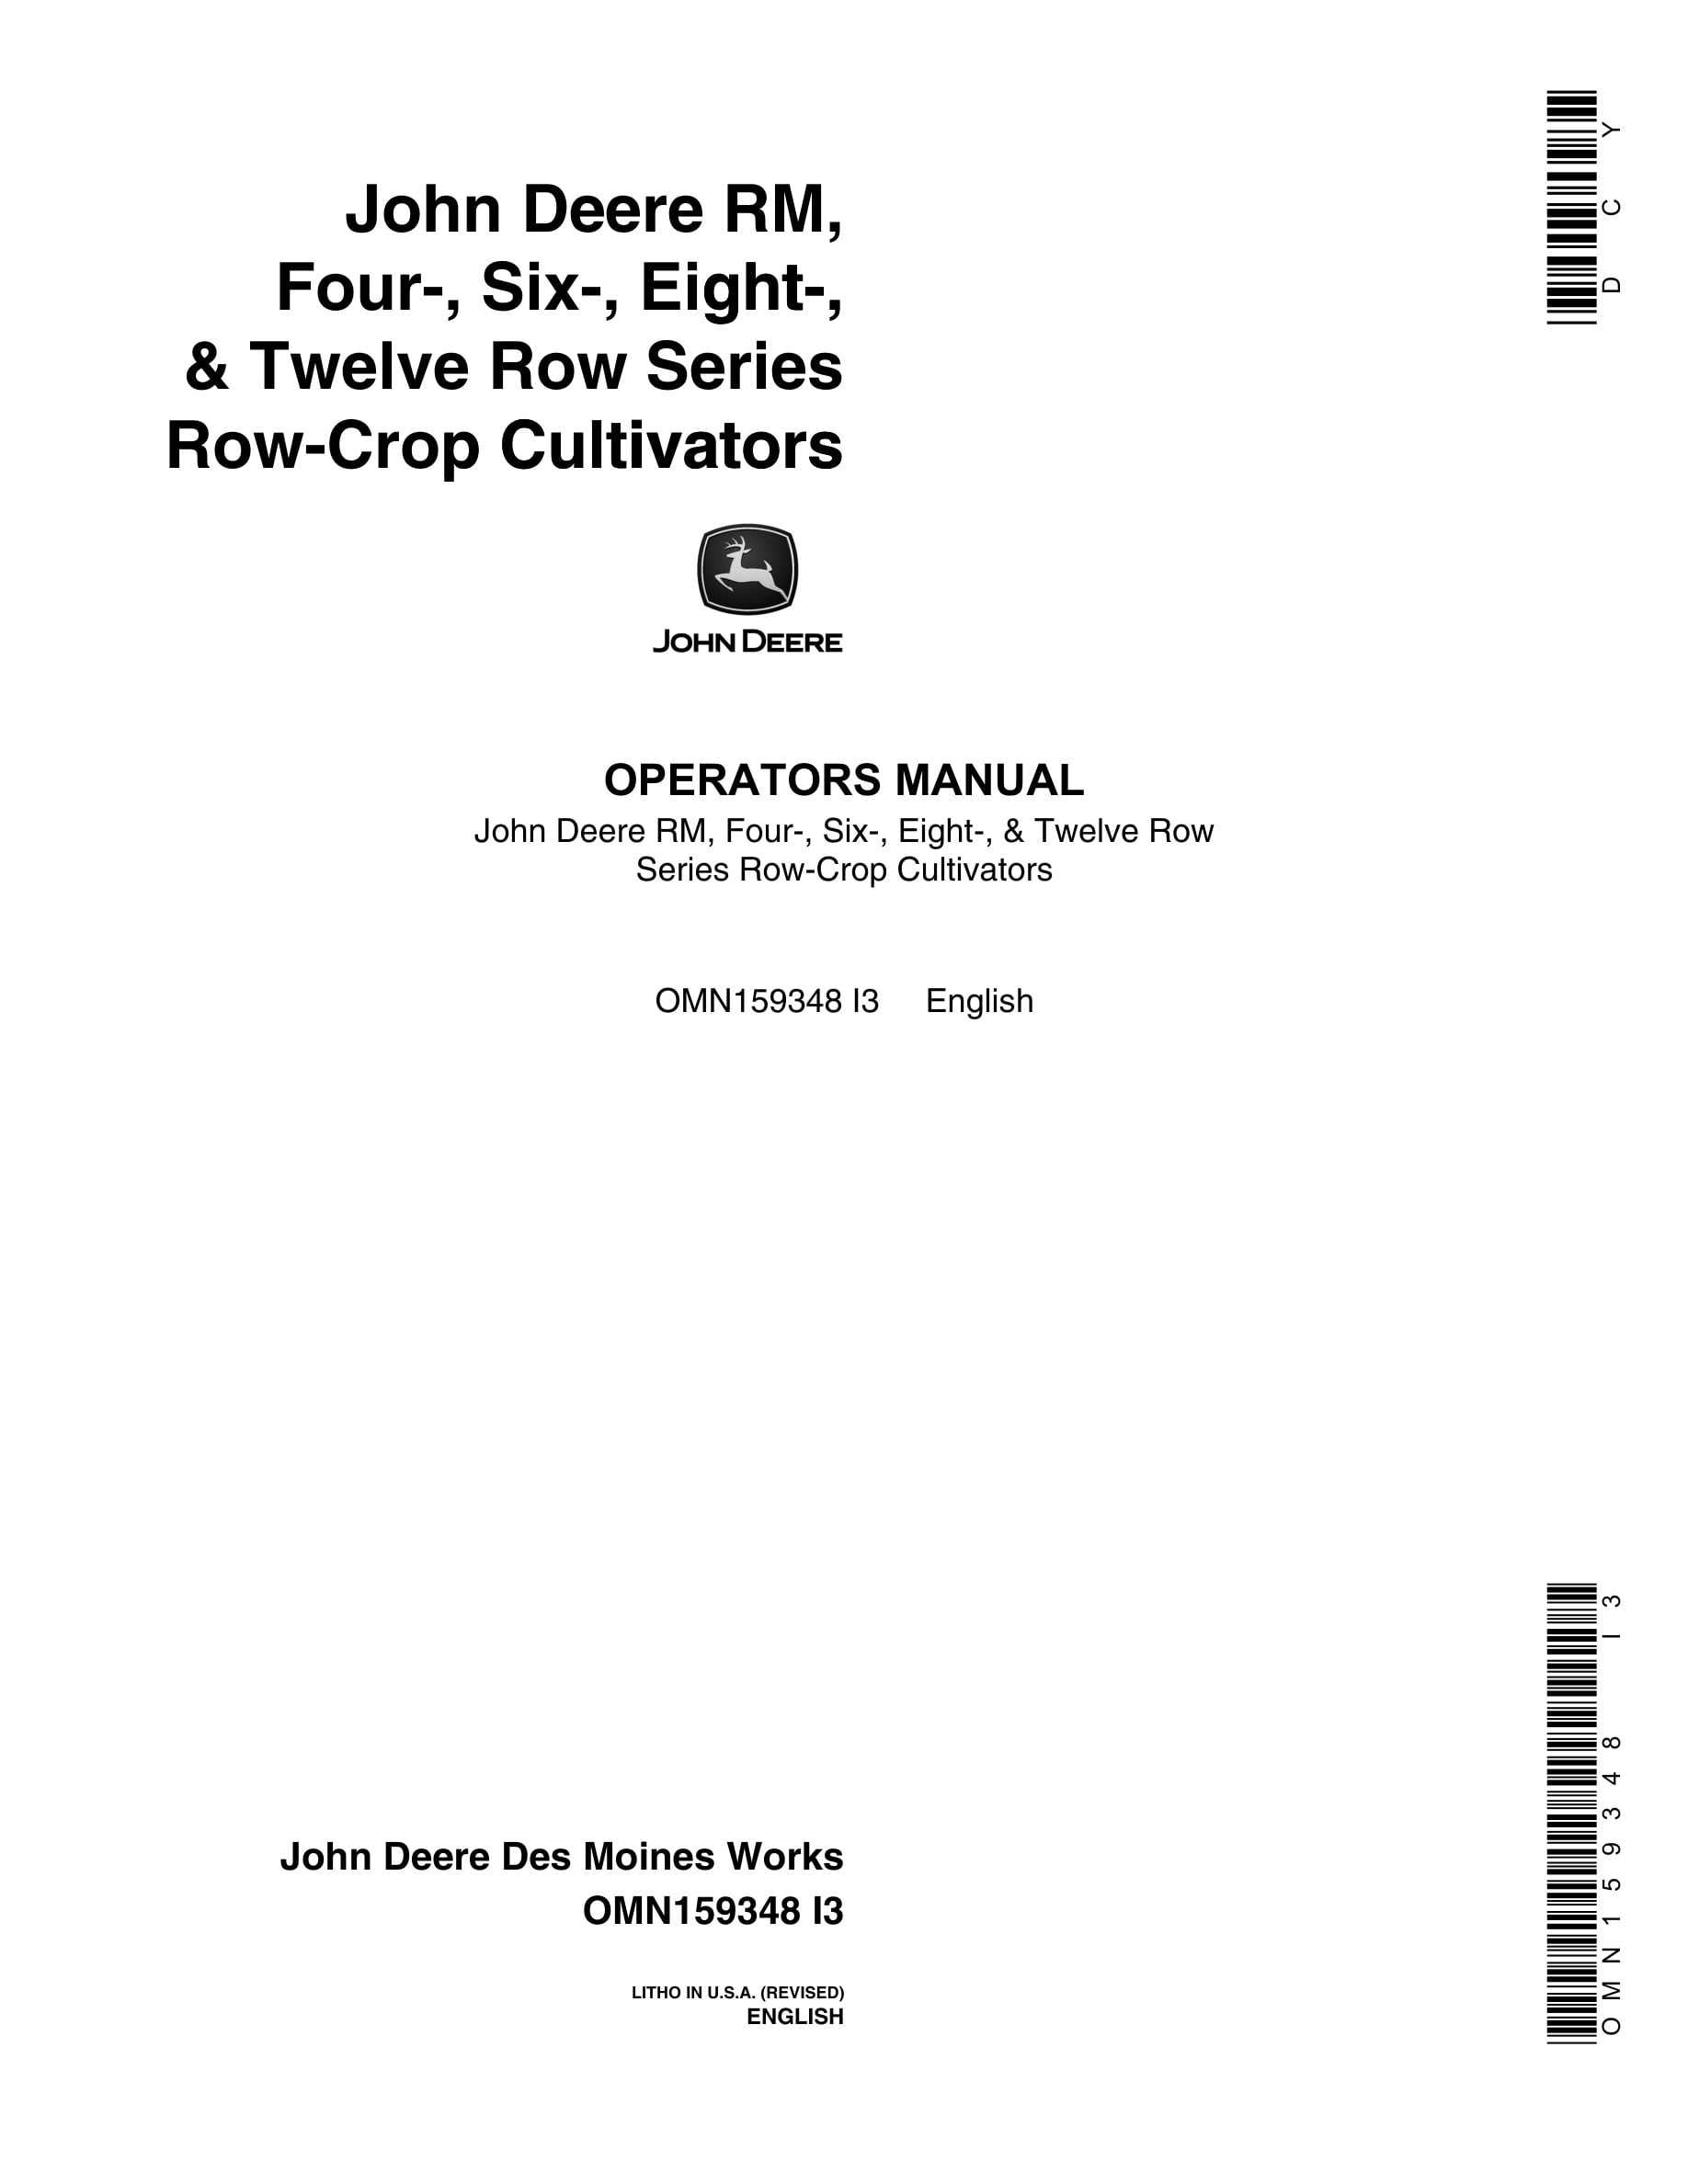 John Deere RM, Four-, Six-, Eight-, & Twelve Row Series Row Operator Manual OMN159348-1